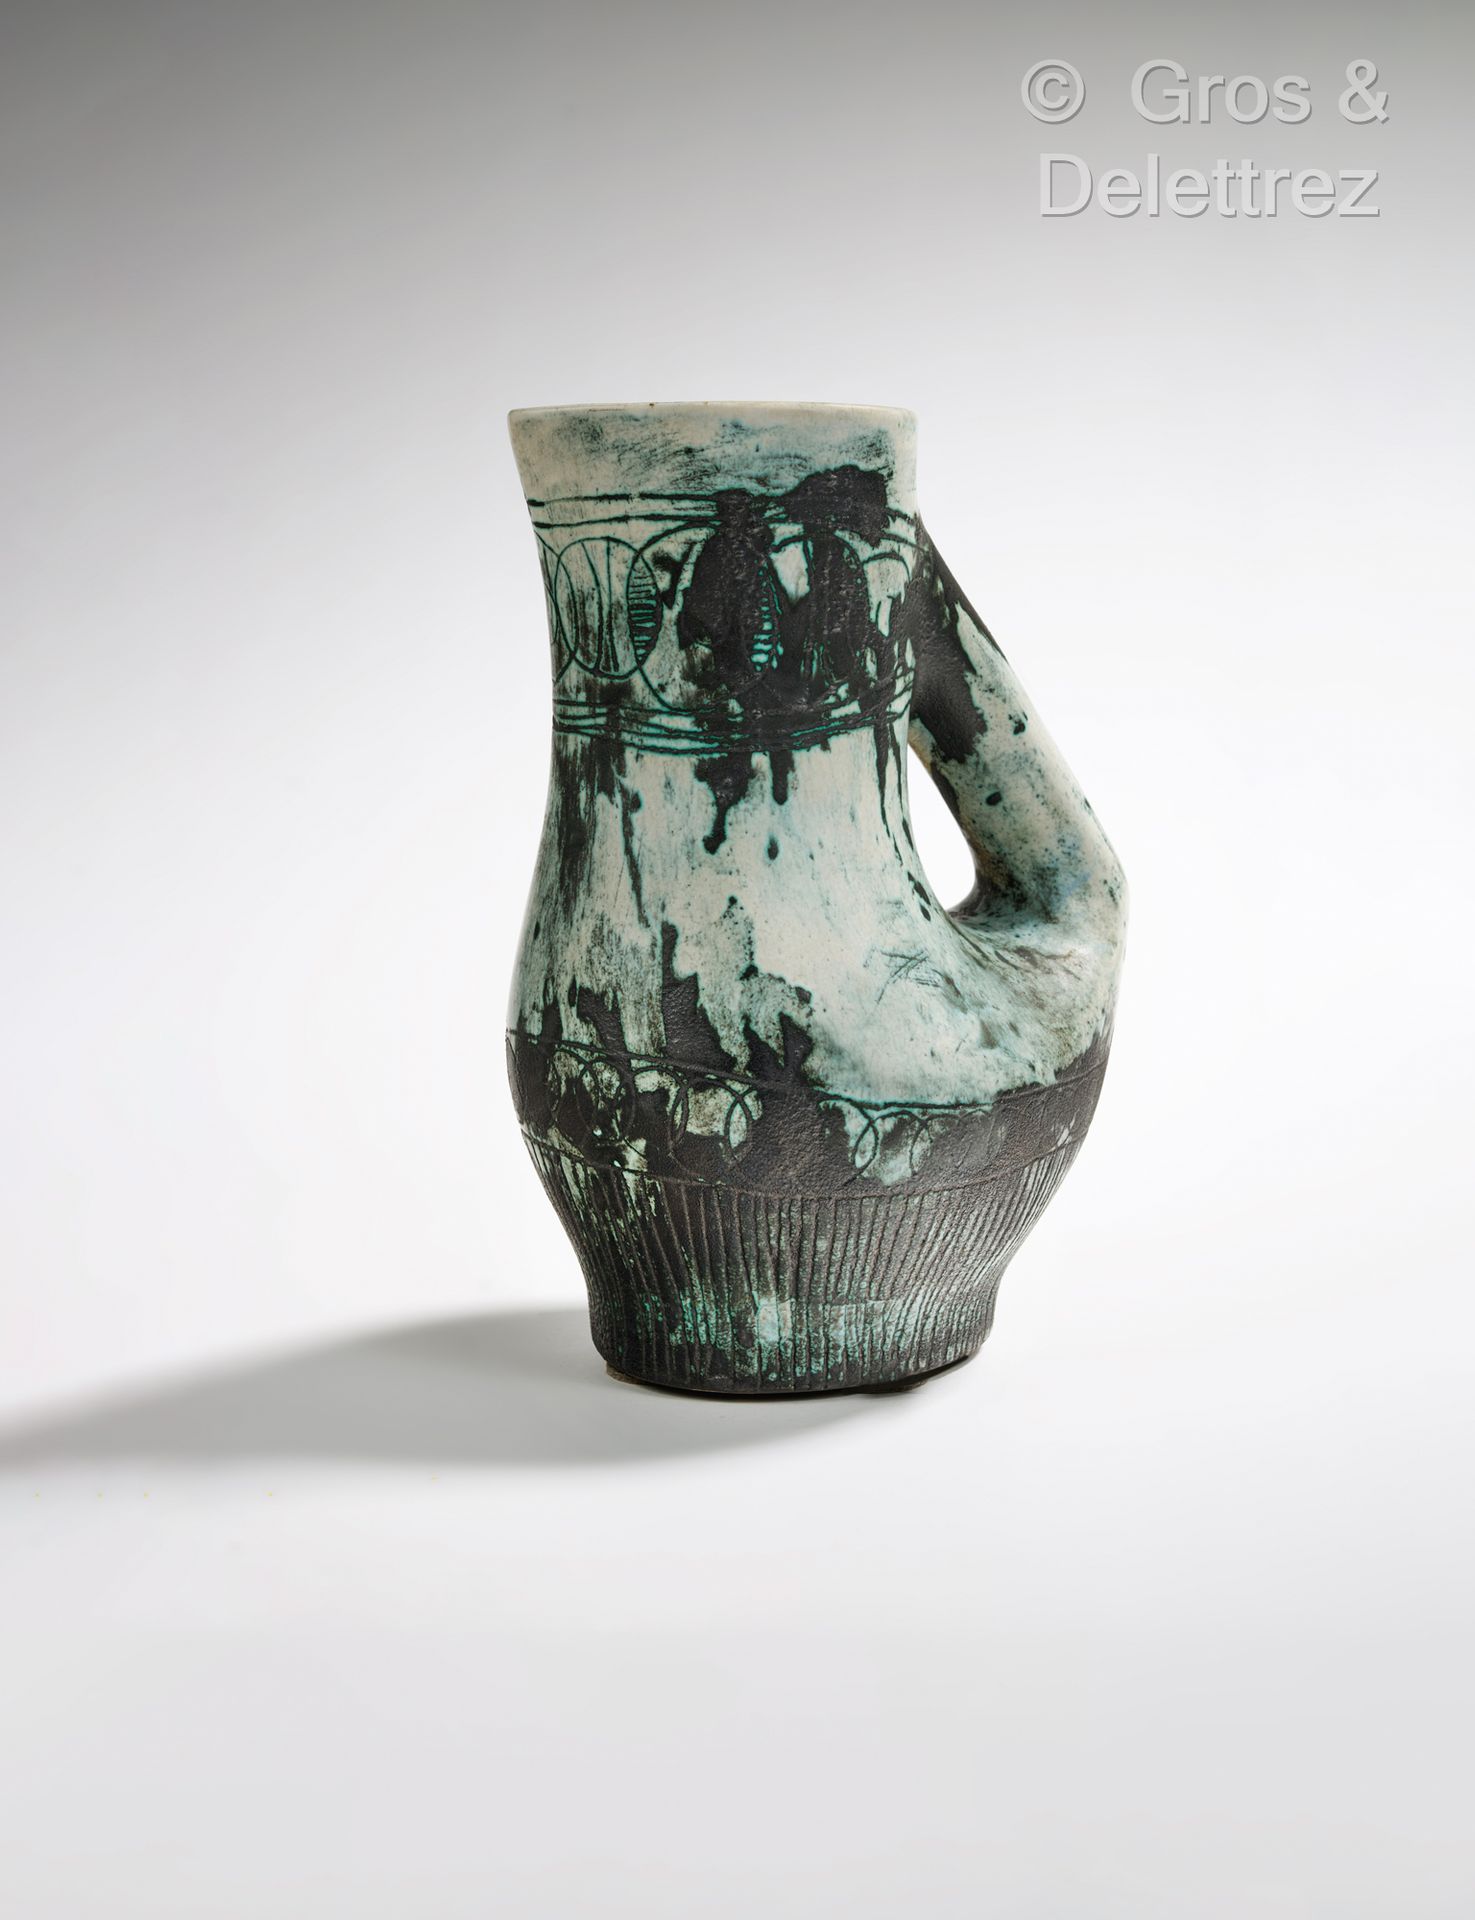 Null 雅克-布林 (1920-1995)
釉面陶瓷壶，有两个几何楣。
签名为 "Jblin"。
大约在1960年。
高24厘米